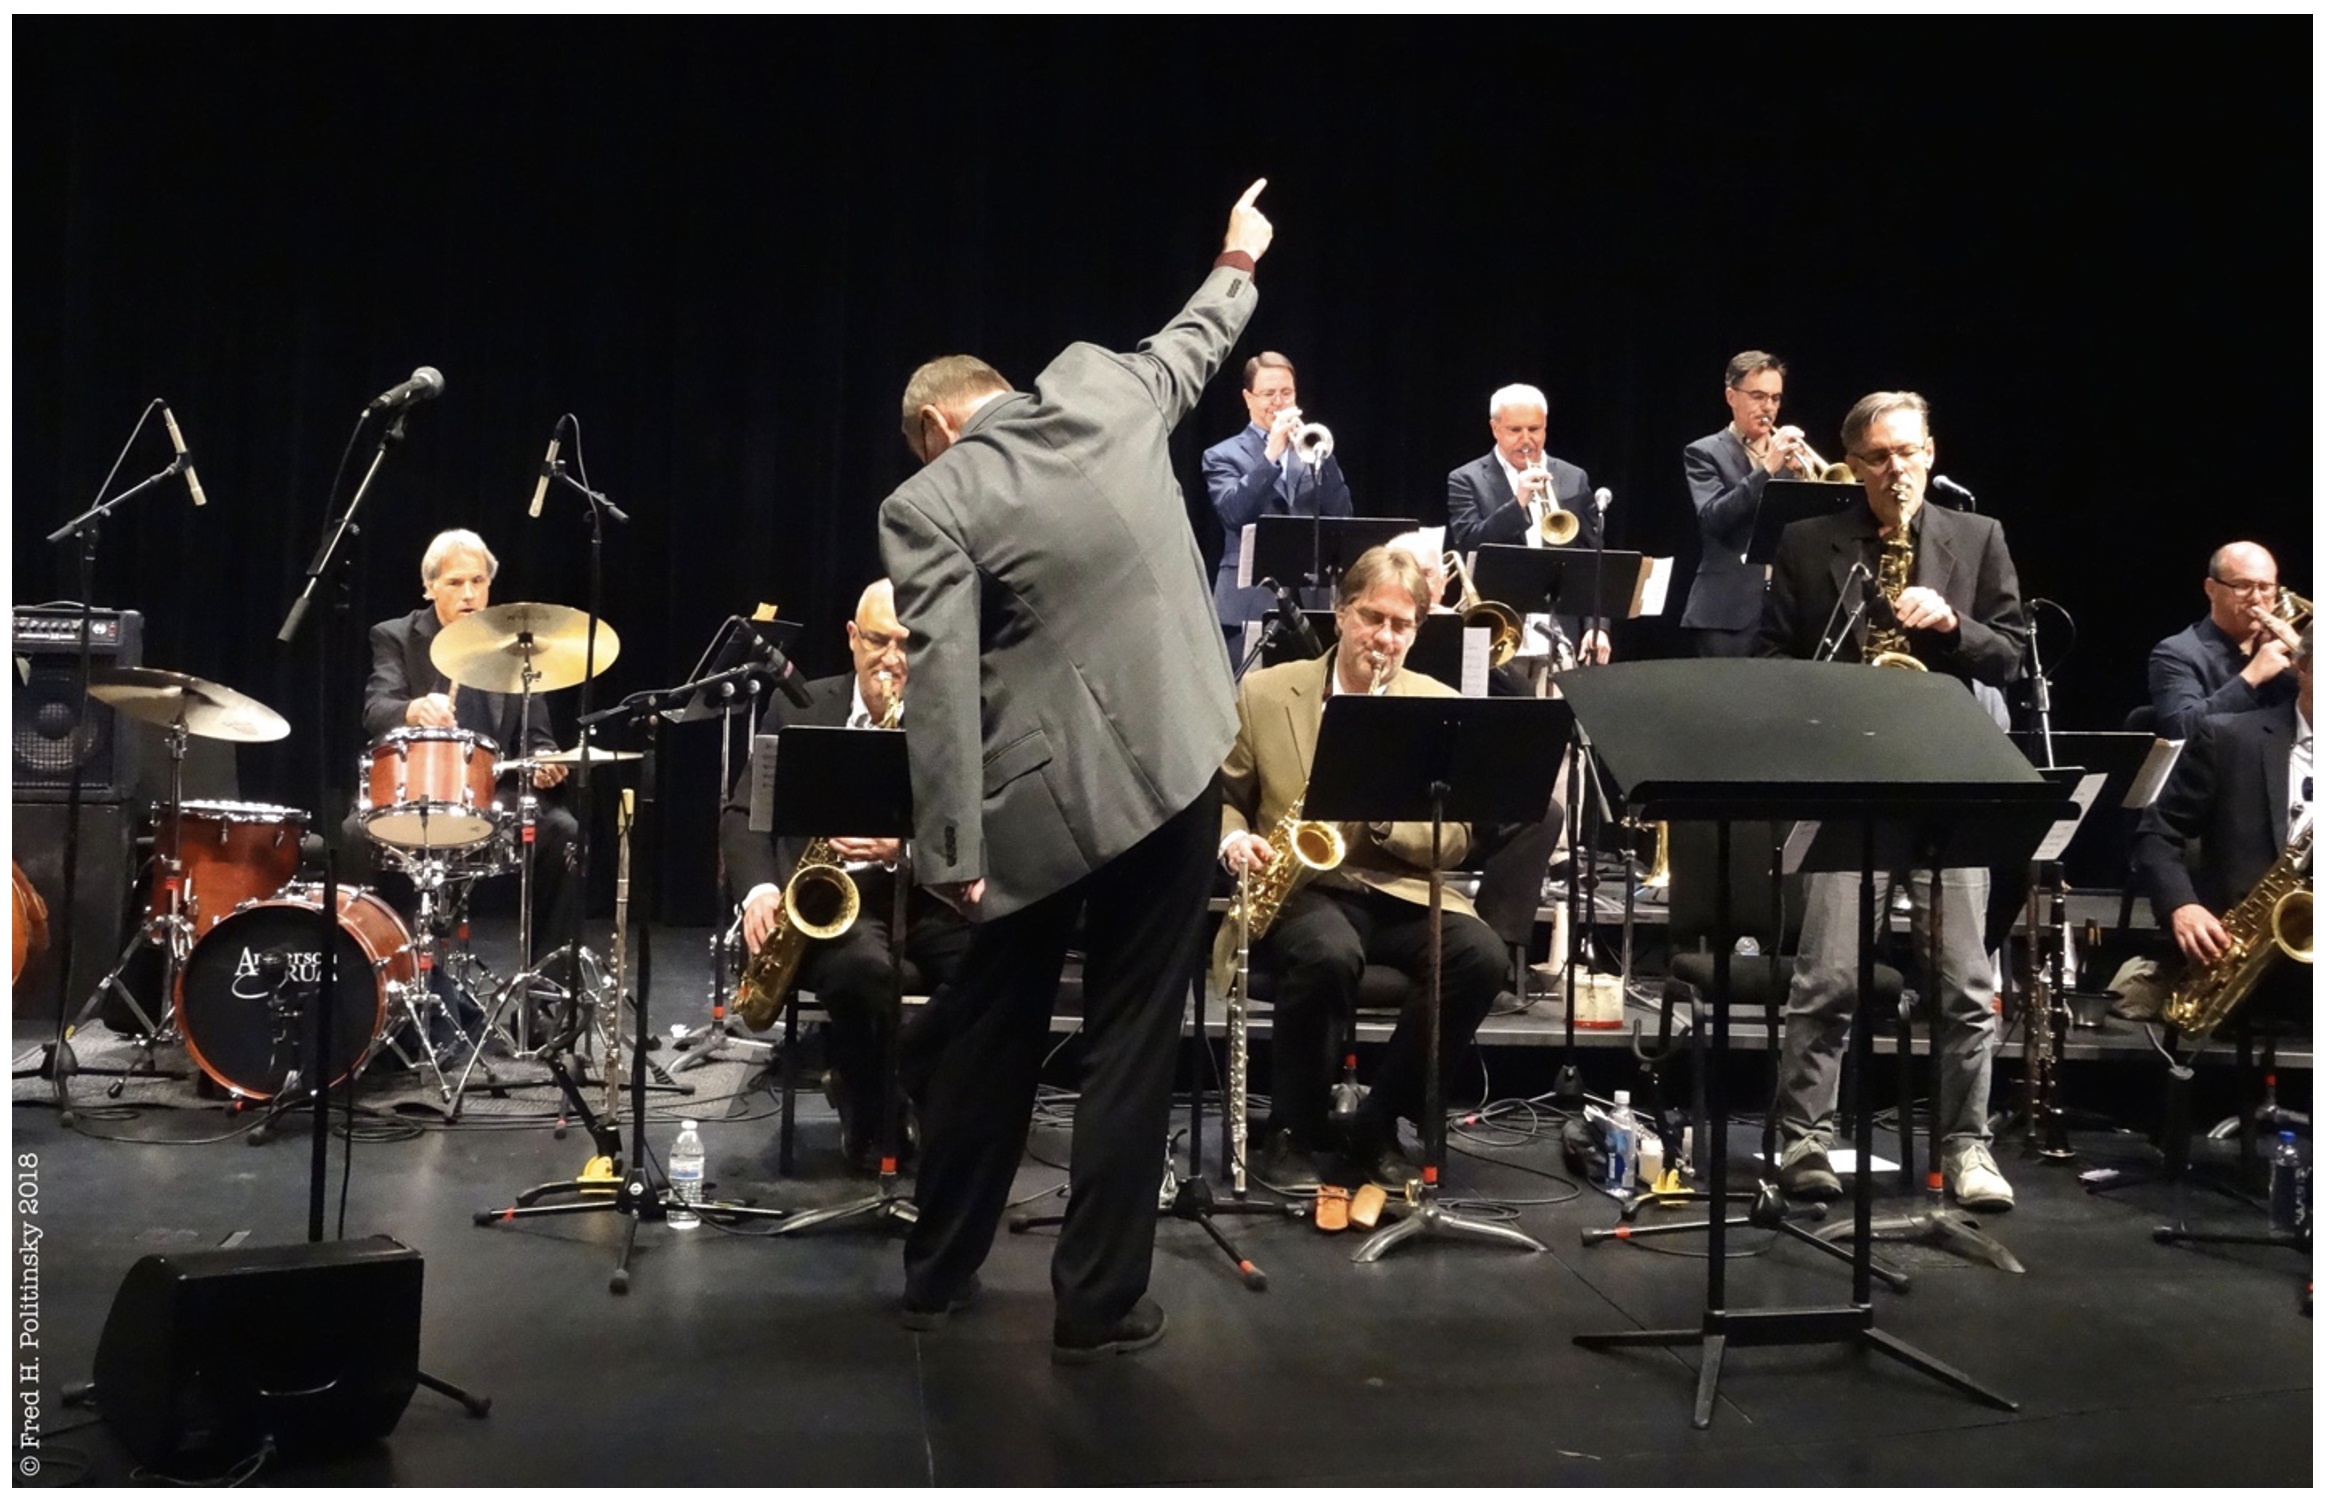 The Pete McGuinness Jazz Orchestra Set to Electrify Birdland with Grammy-Nominated Big Band Jazz